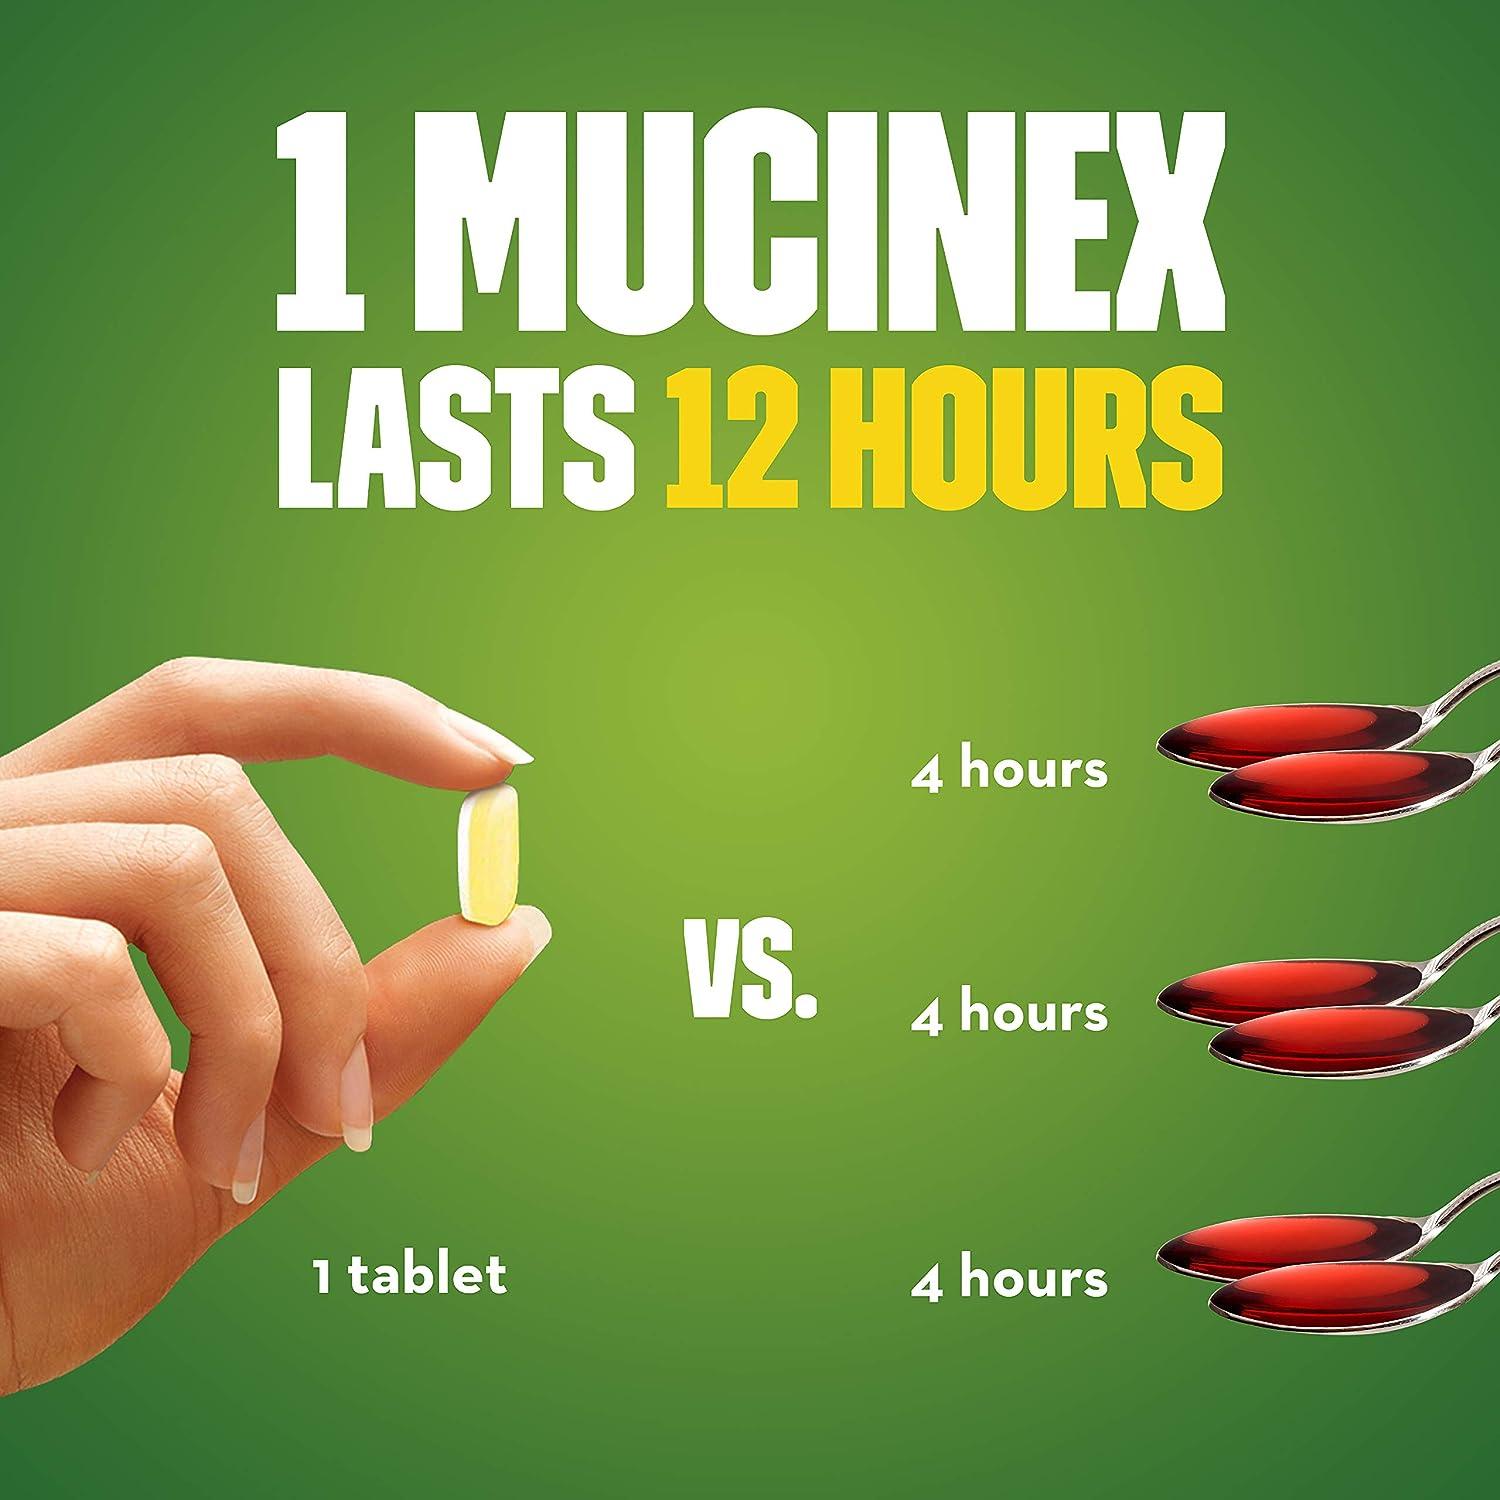  Mucinex Chest Congestion Maximum Strength 12 Hour